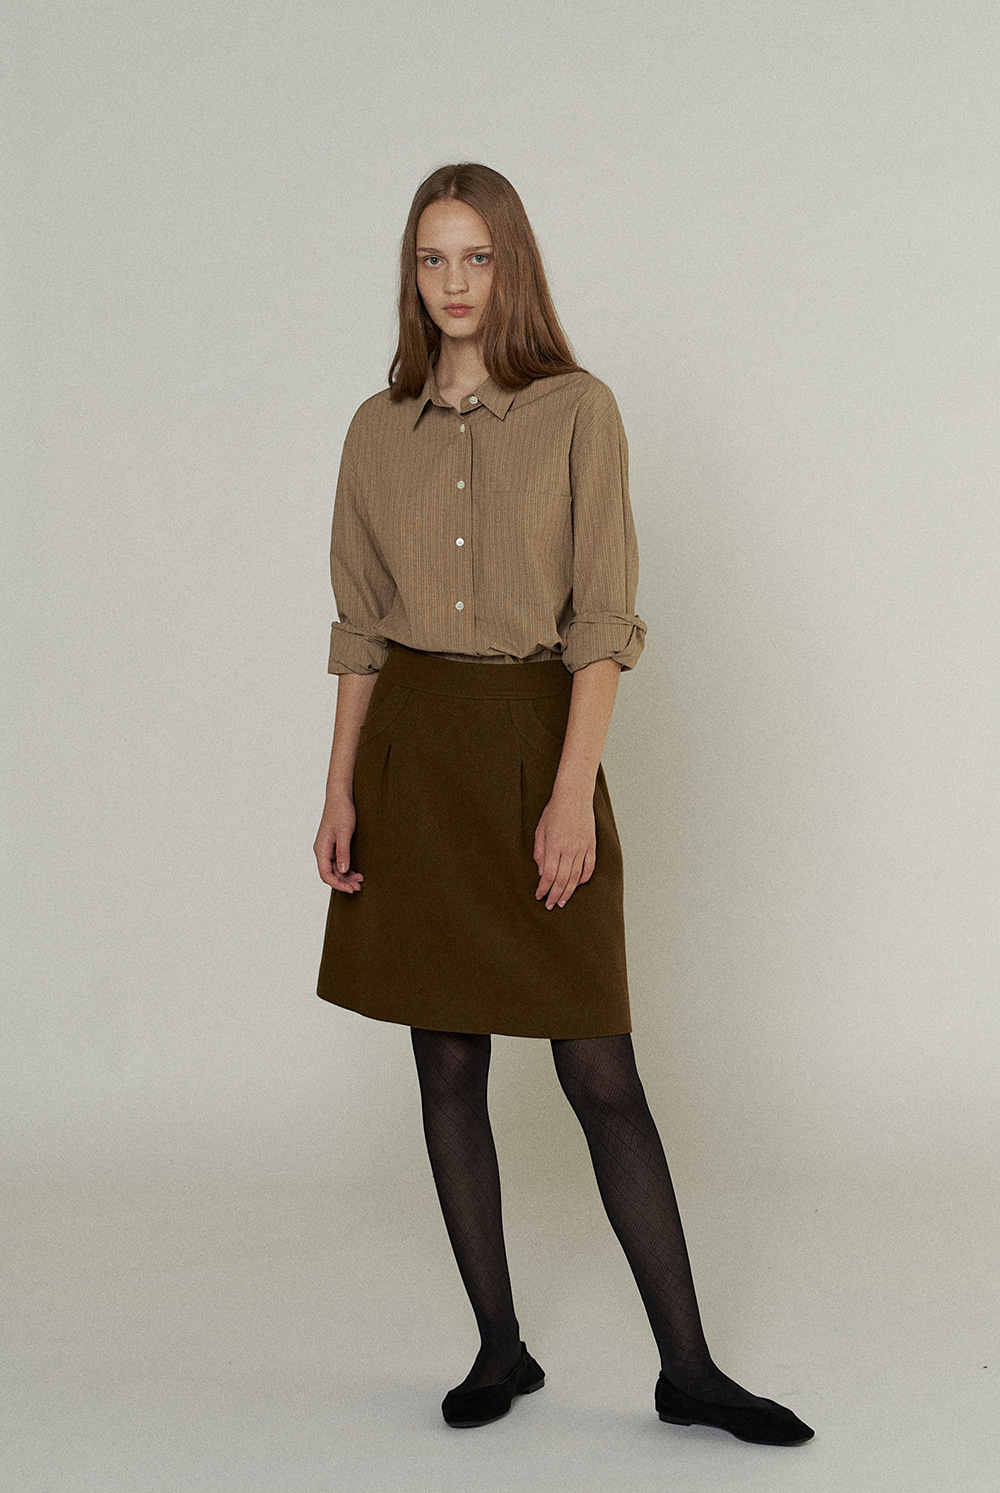 [REORDER] Half-Moon Pocket Skirt in Khaki Brown